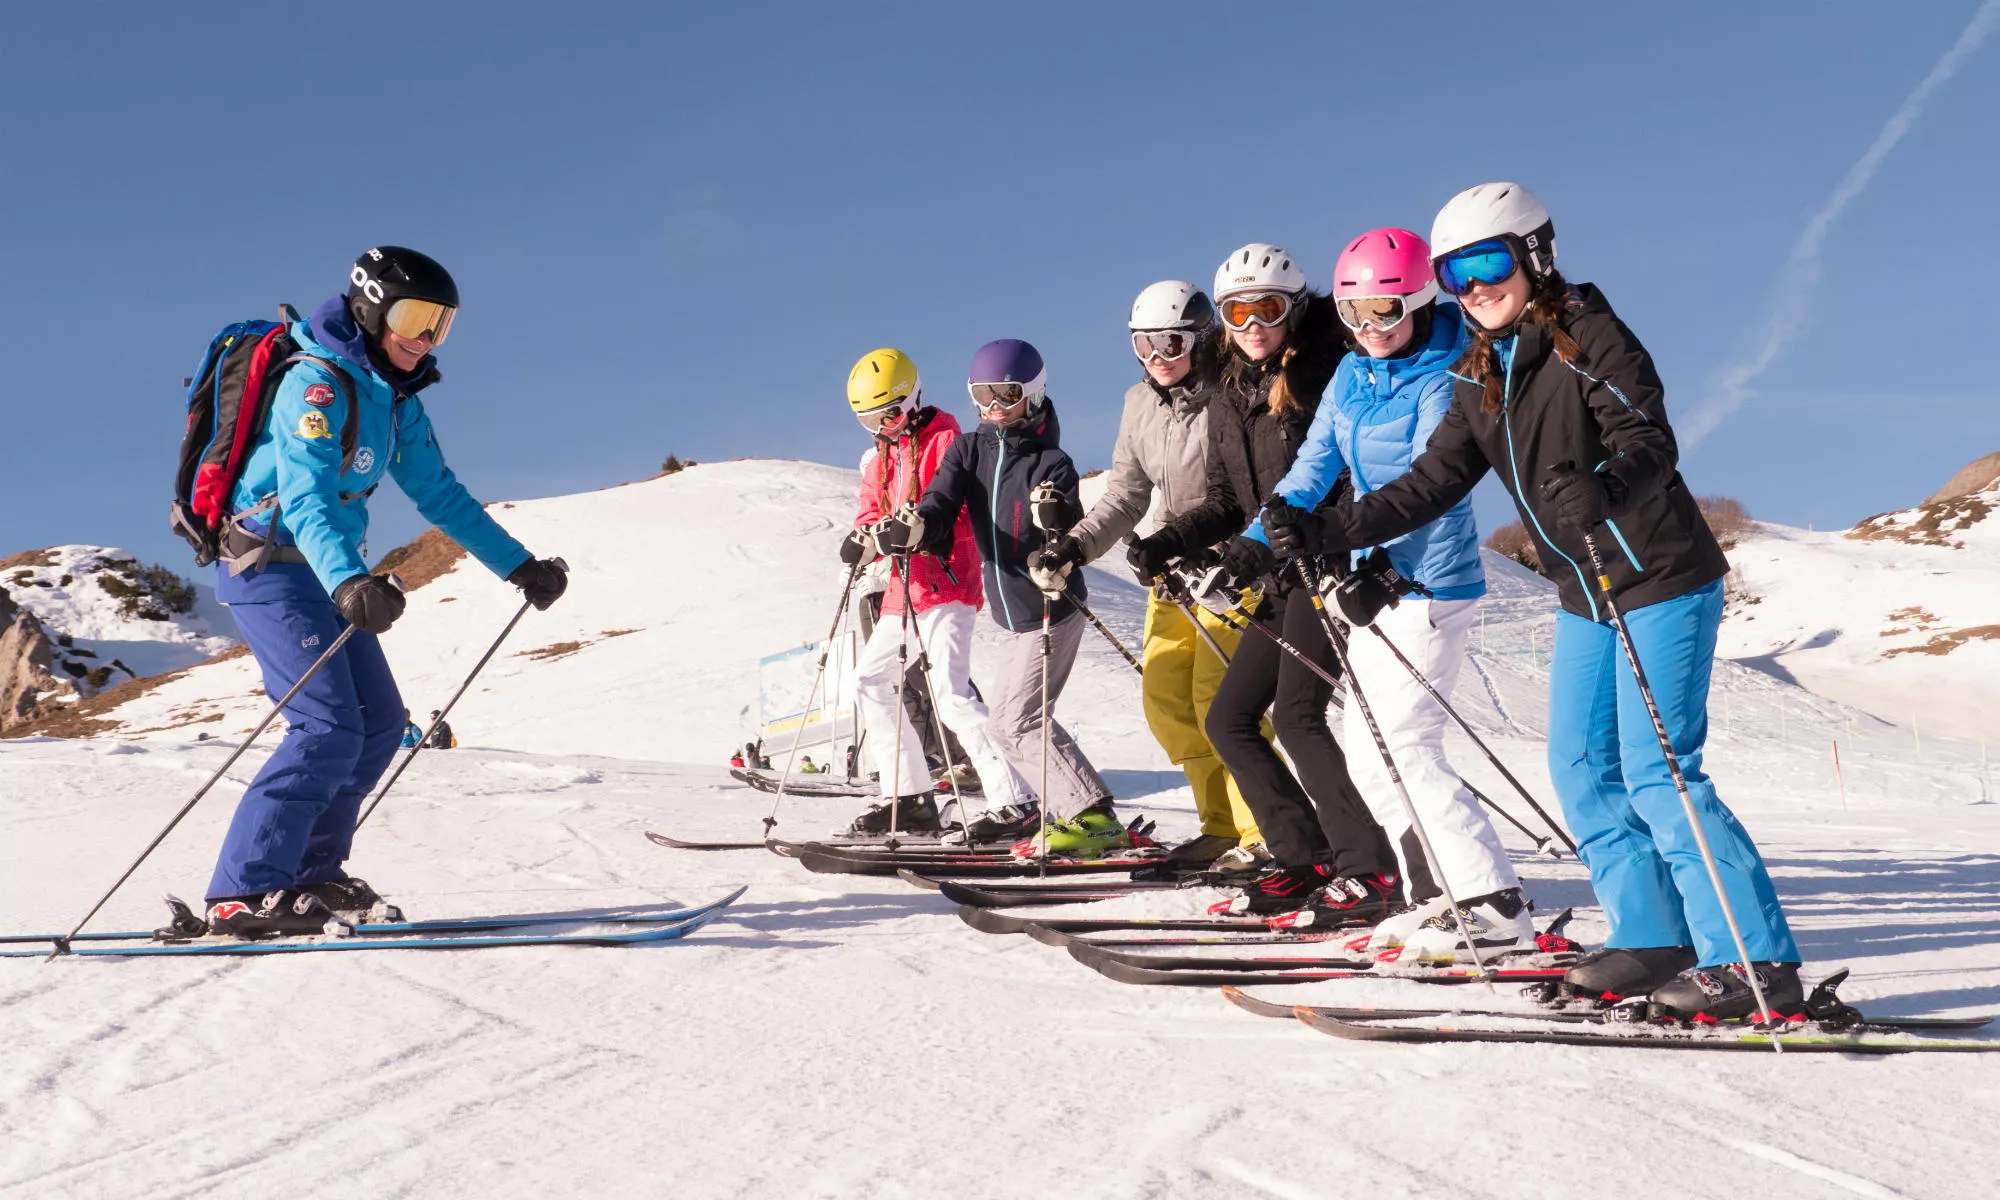 Major Ski School in Czech Republic, Europe | Snowboarding,Skiing - Rated 0.9